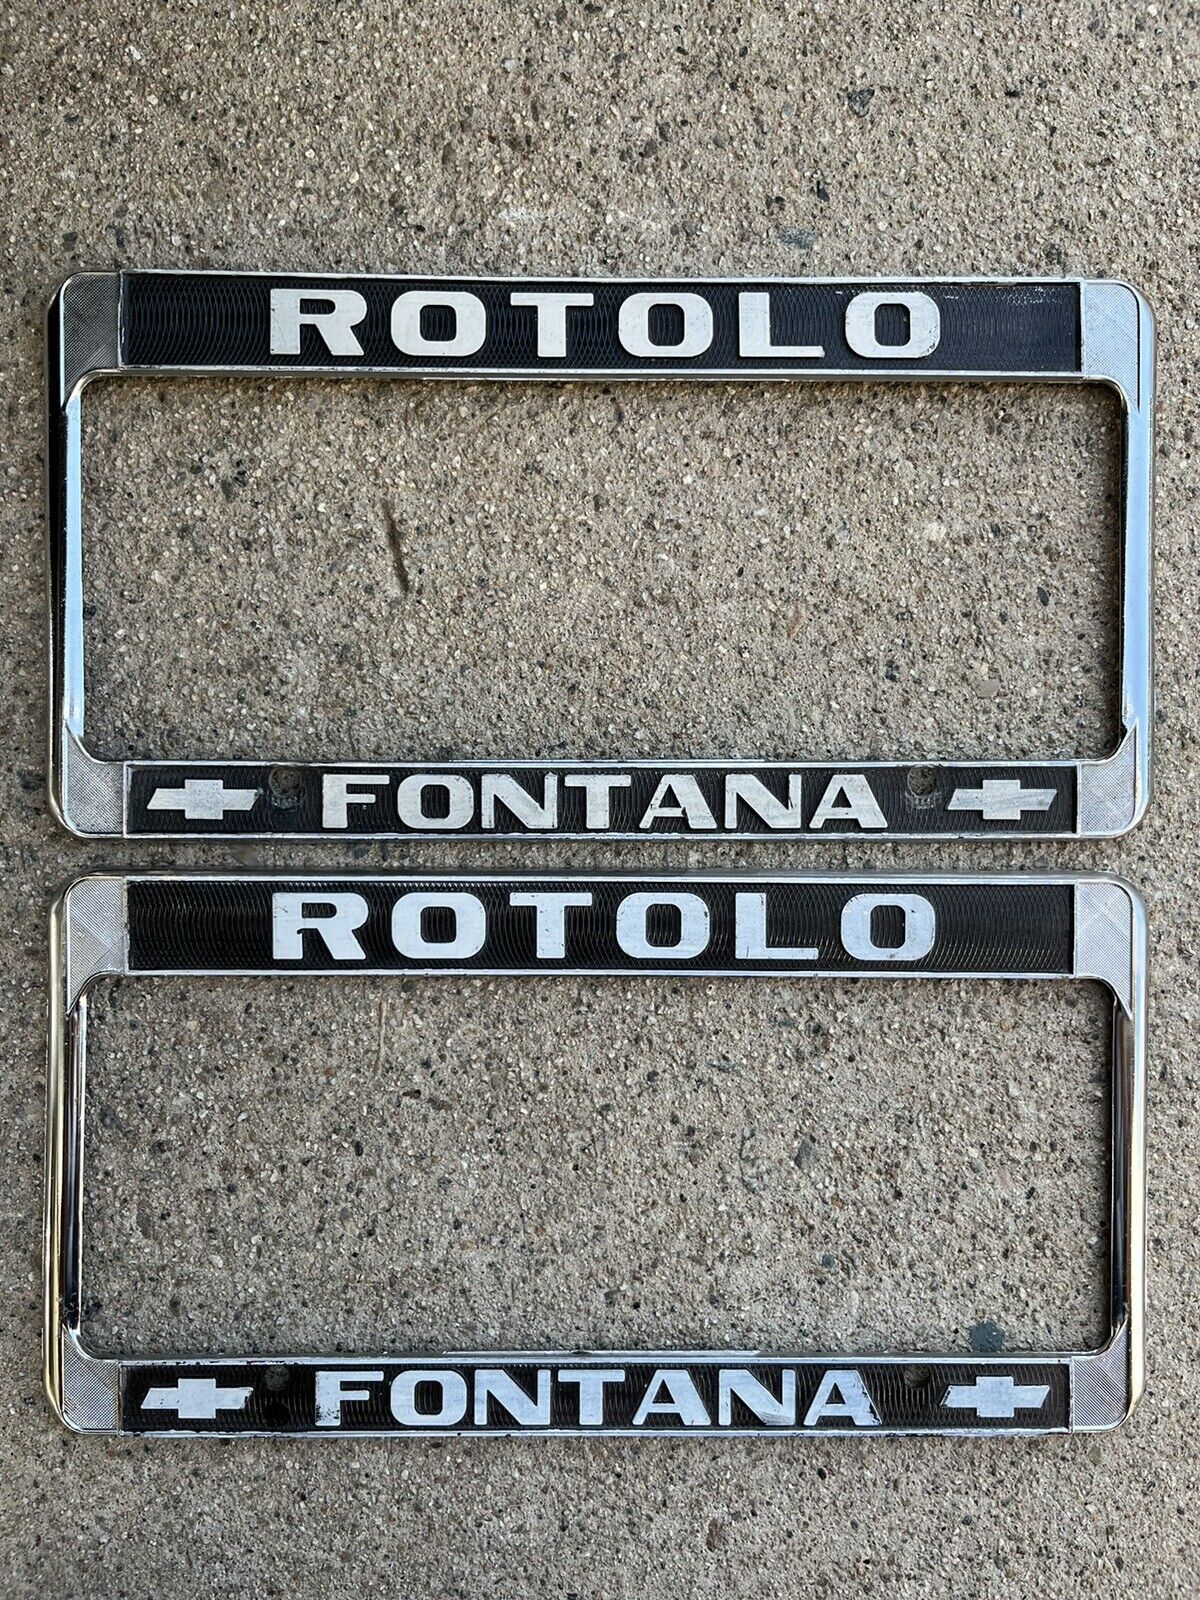 Rotolo Chevrolet Fontana, California License Plate Frame Set